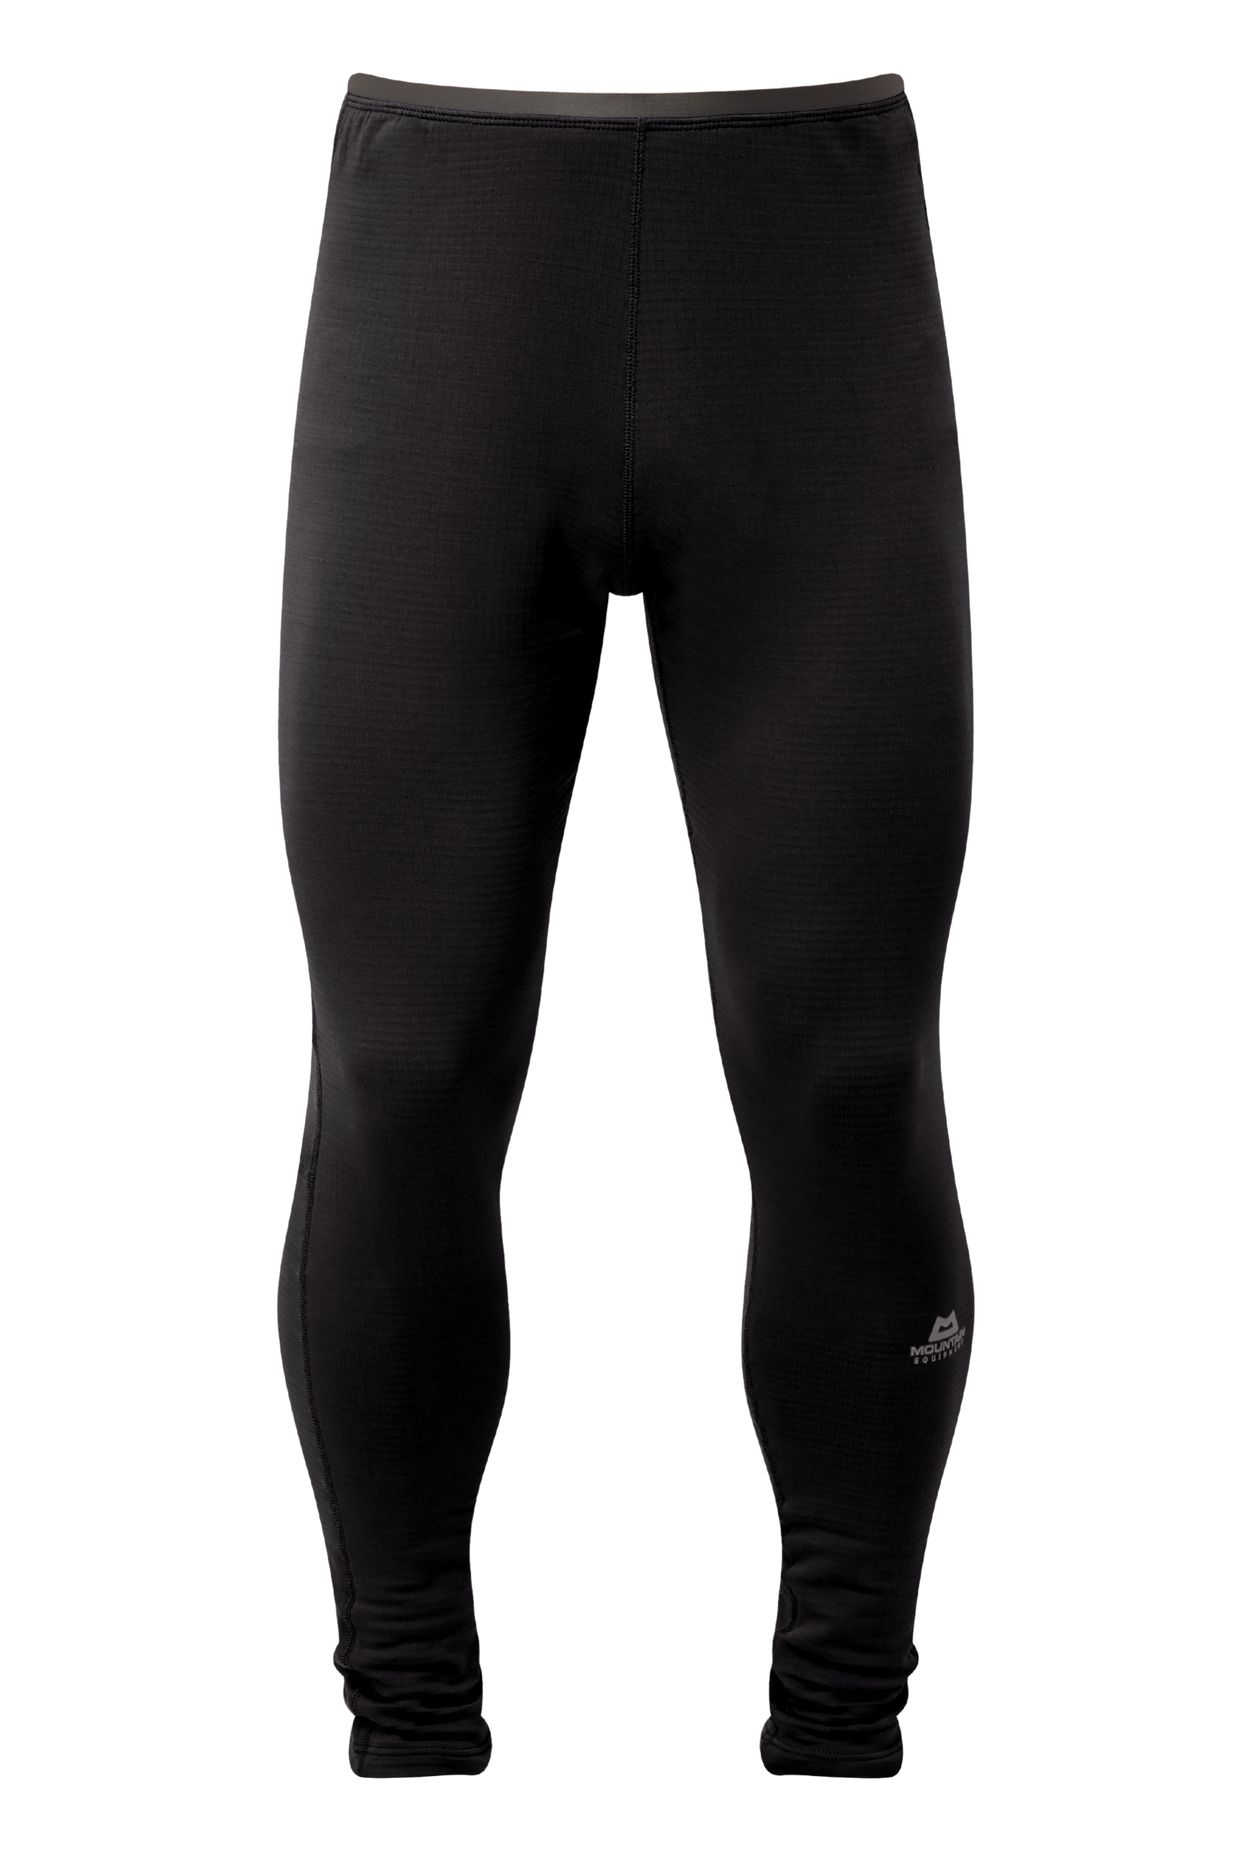 Mountain Equipment pánské fleece kalhoty Eclipse Pant Barva: black, Velikost: XXL